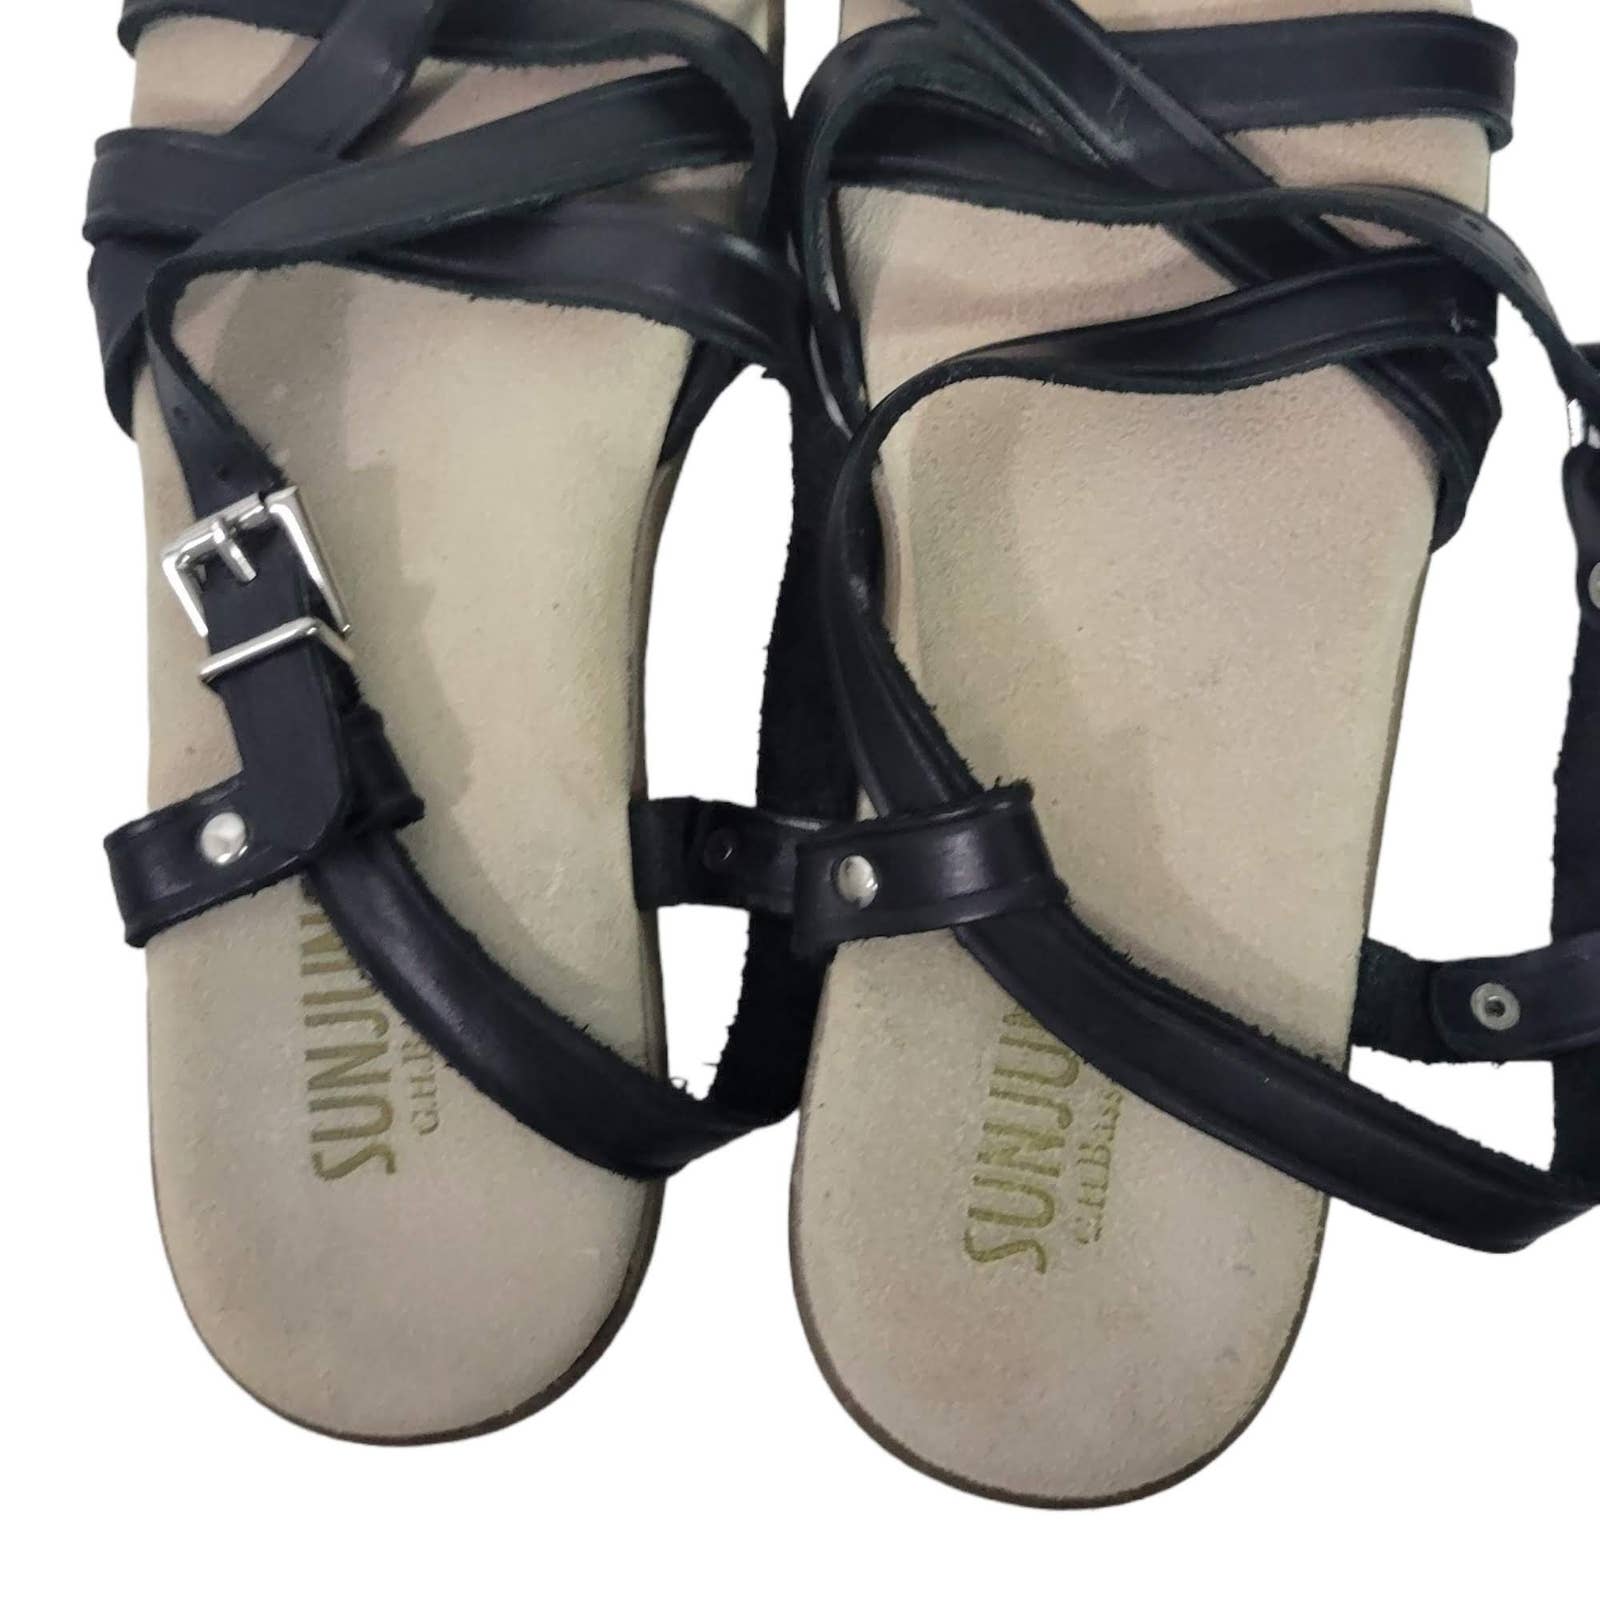 Bass Margie Sunjuns Black Sandals Leather Adjustable Strap Flats Padded Size 5.5